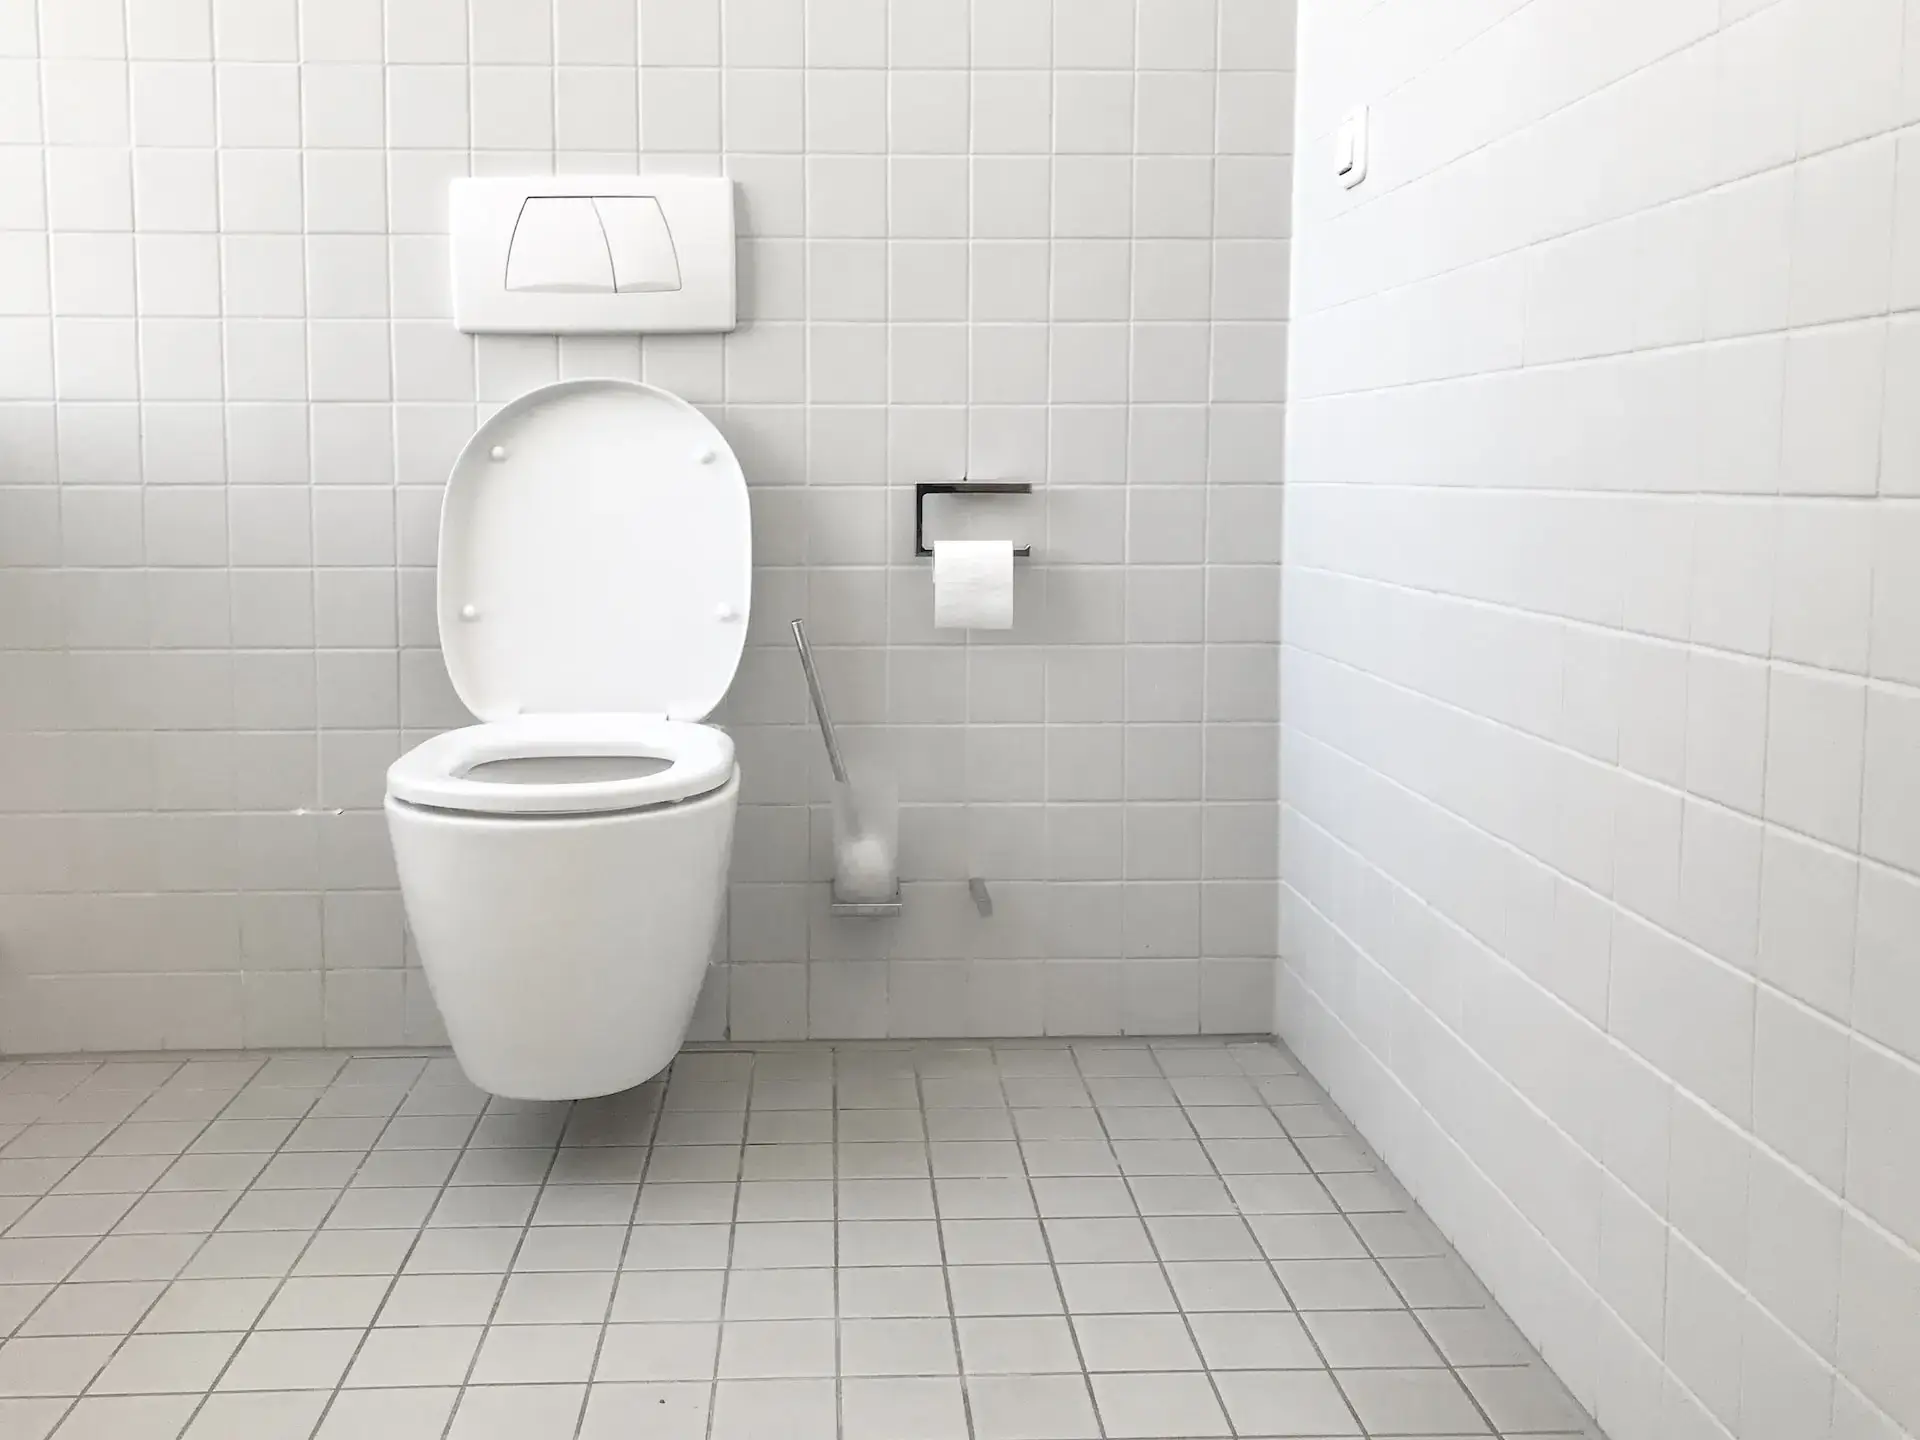 https://diyhouseprojects.net/wp-content/uploads/2022/11/plunge-a-toilet.webp